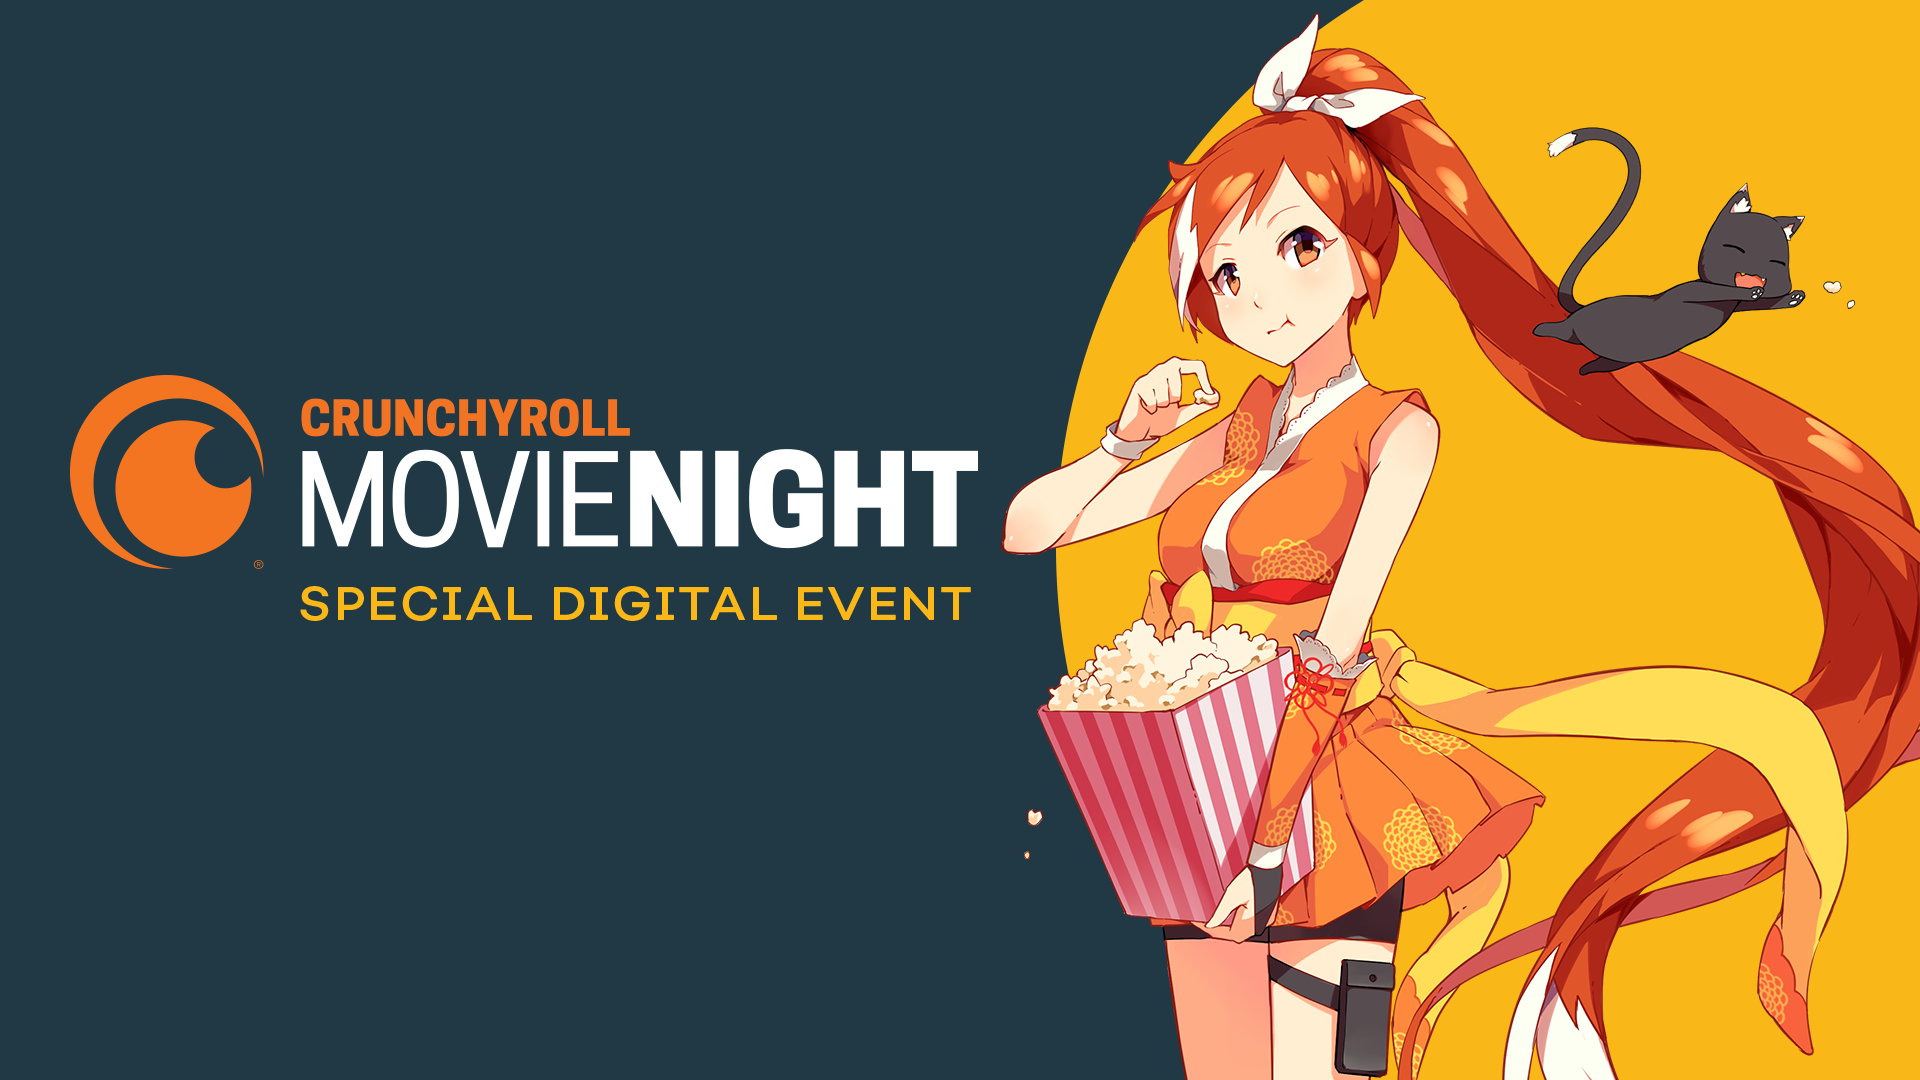 Noche de cine Crunchyroll en casa